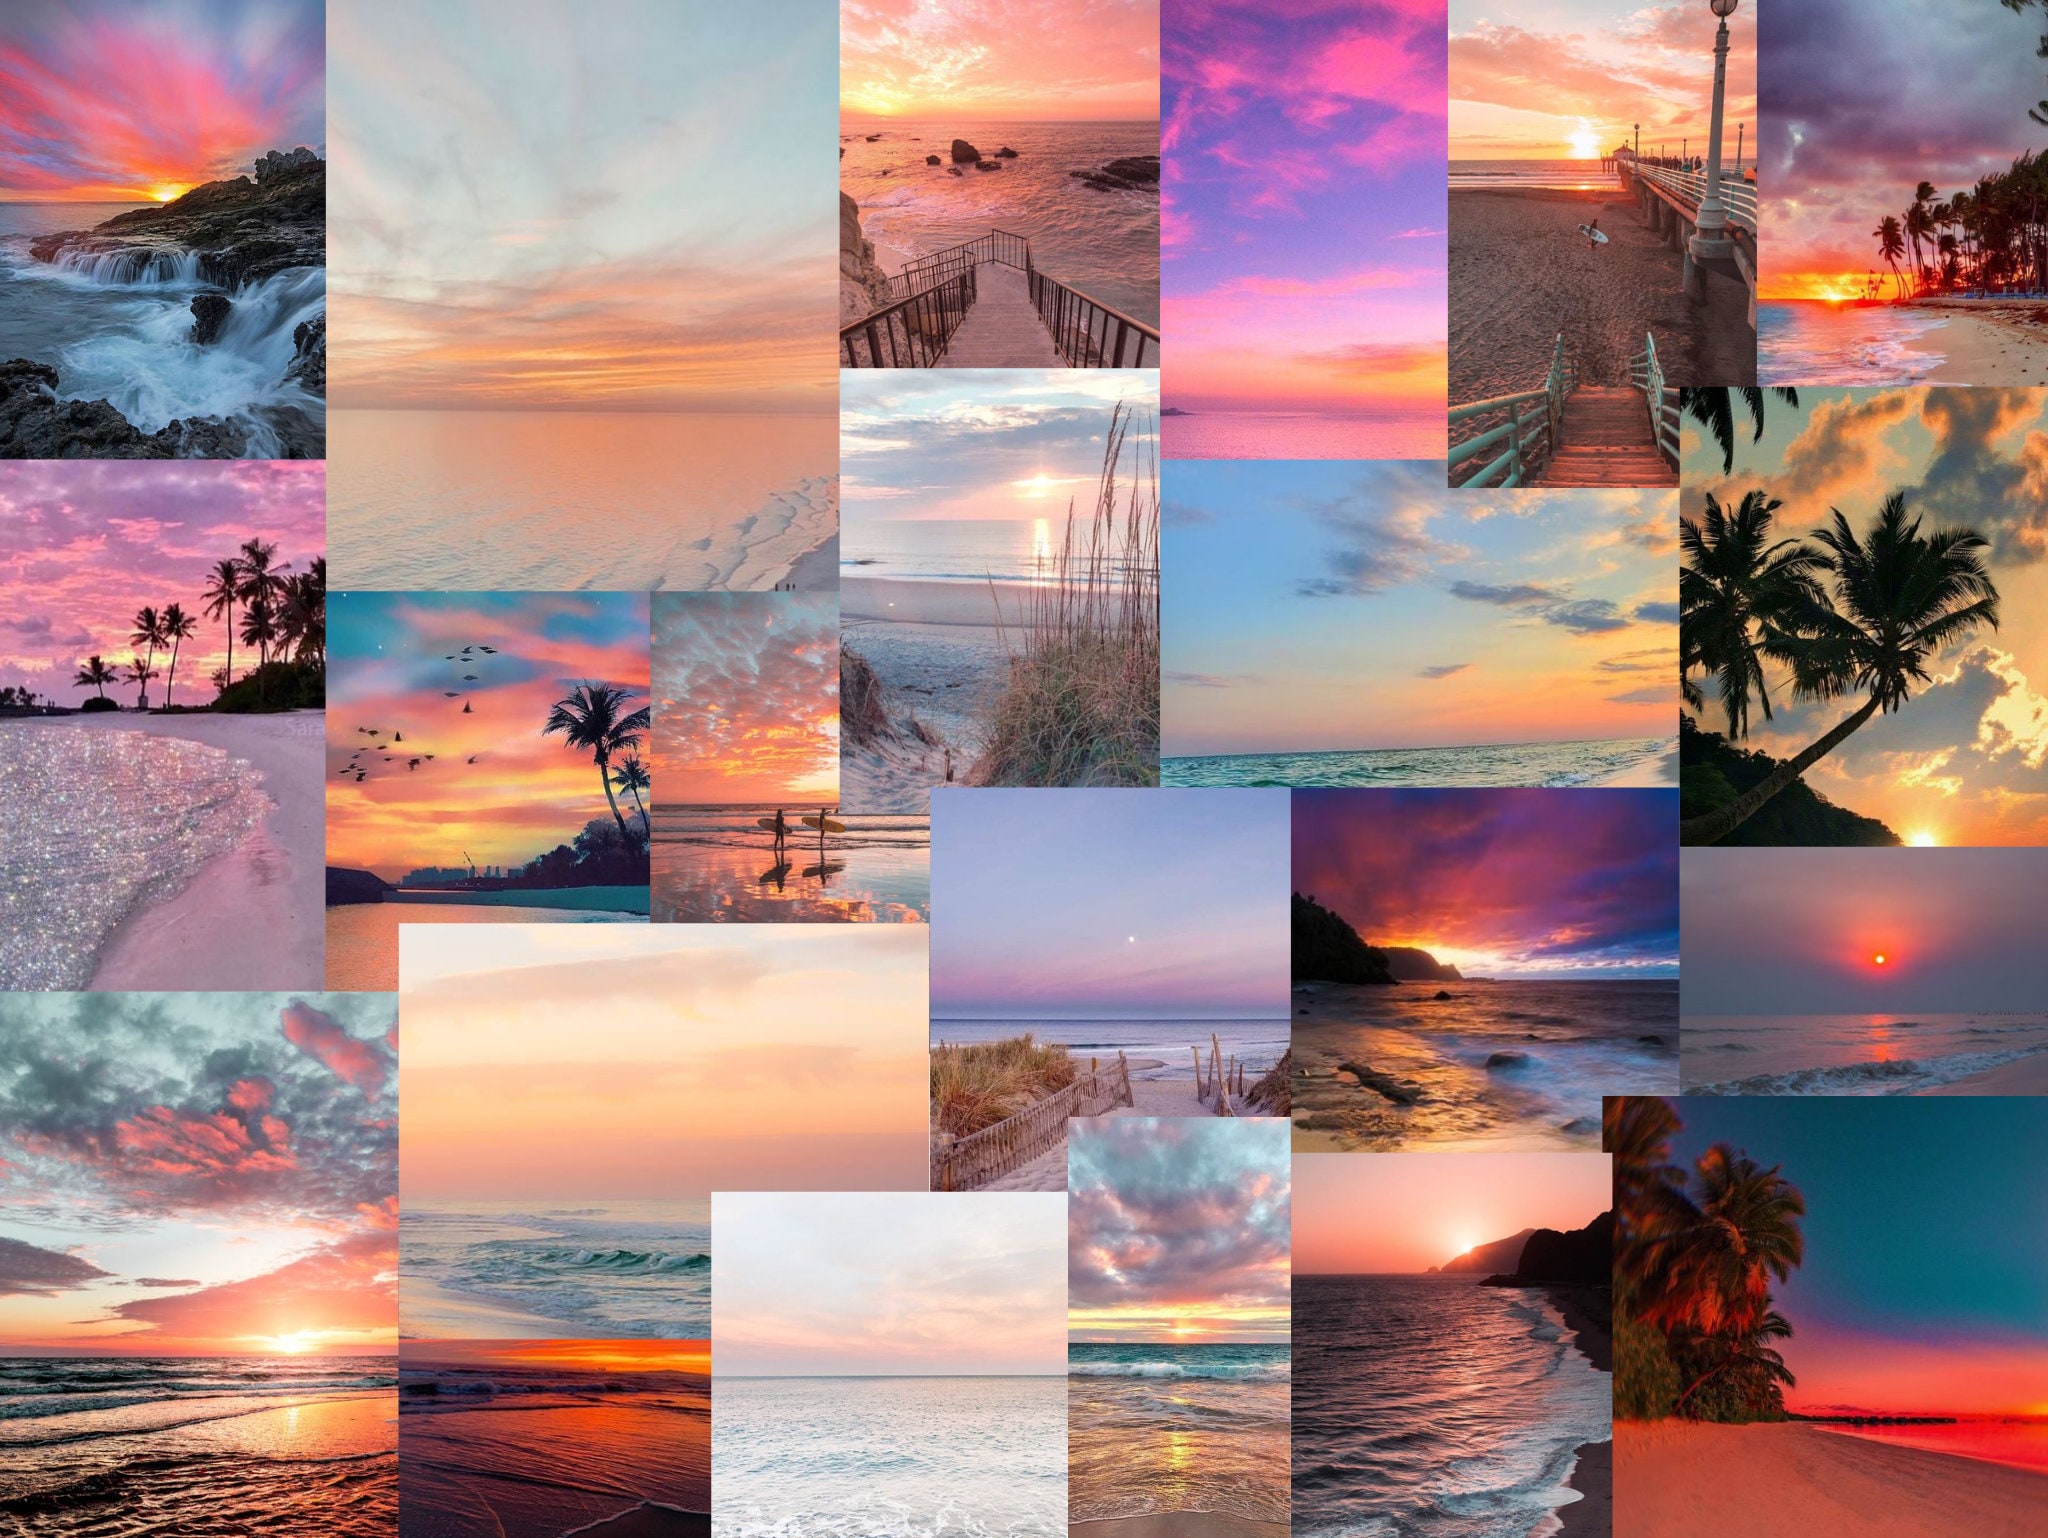 Aesthetic Digital Beach Sunset Collage Wallpaper Ipad | Etsy